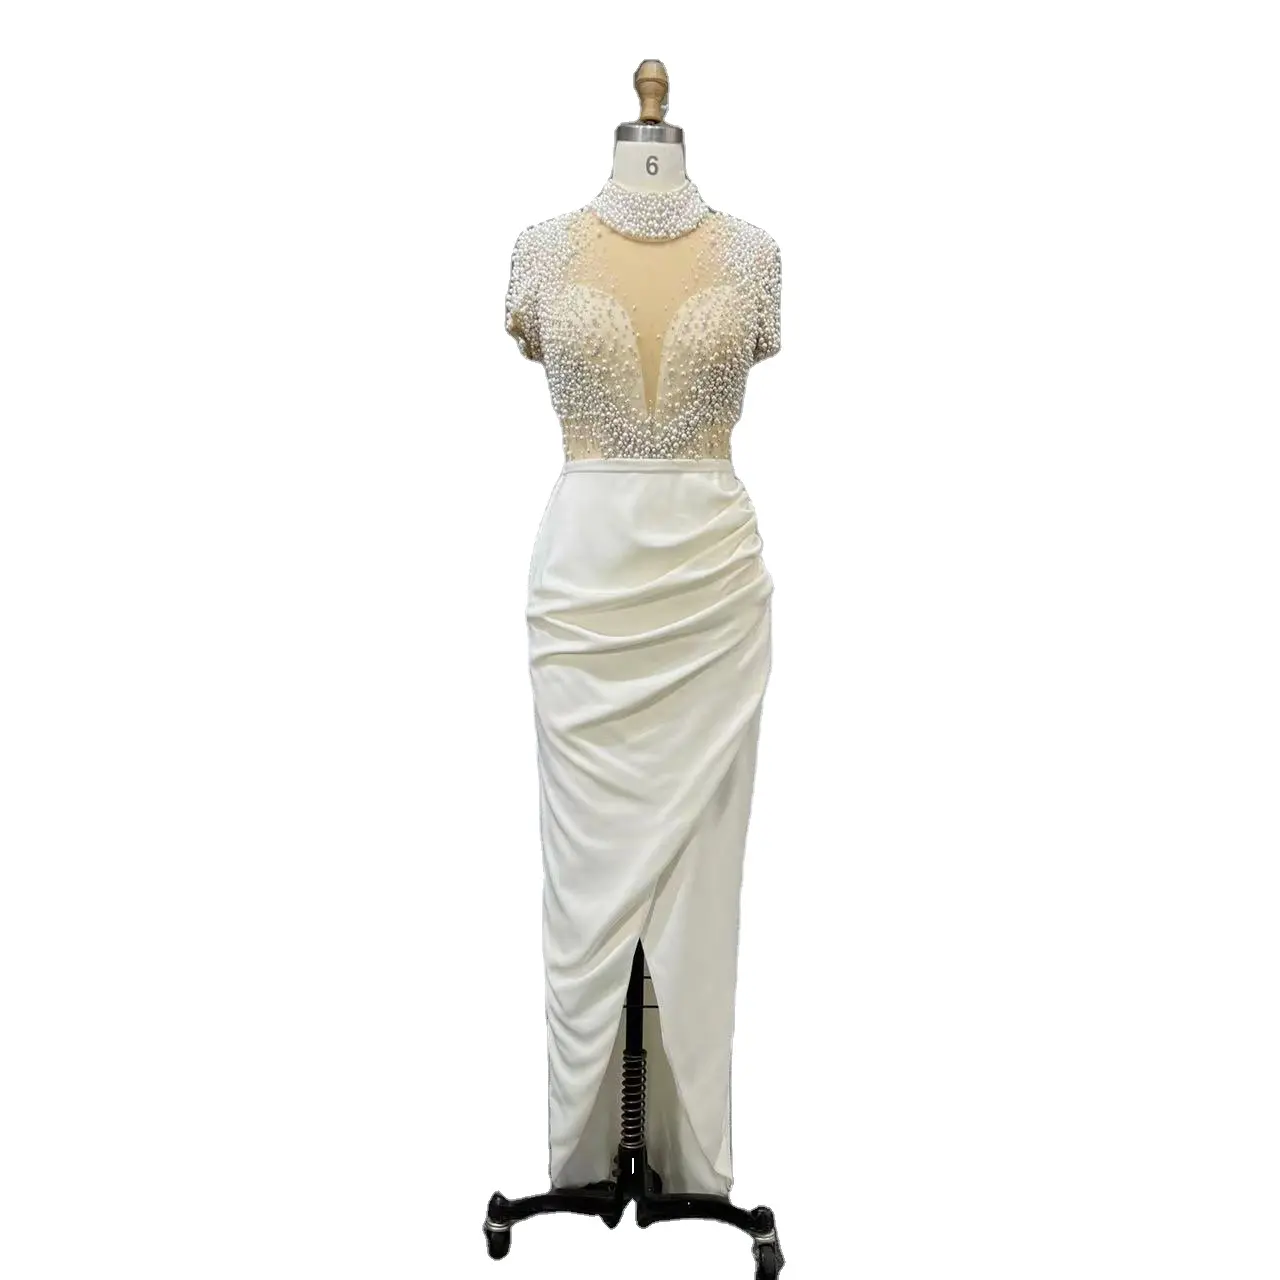 New Arrival vestido de novia Pearl Split Wrapped Evening Dress High Neck Beading Dress For Women Formal Gowns